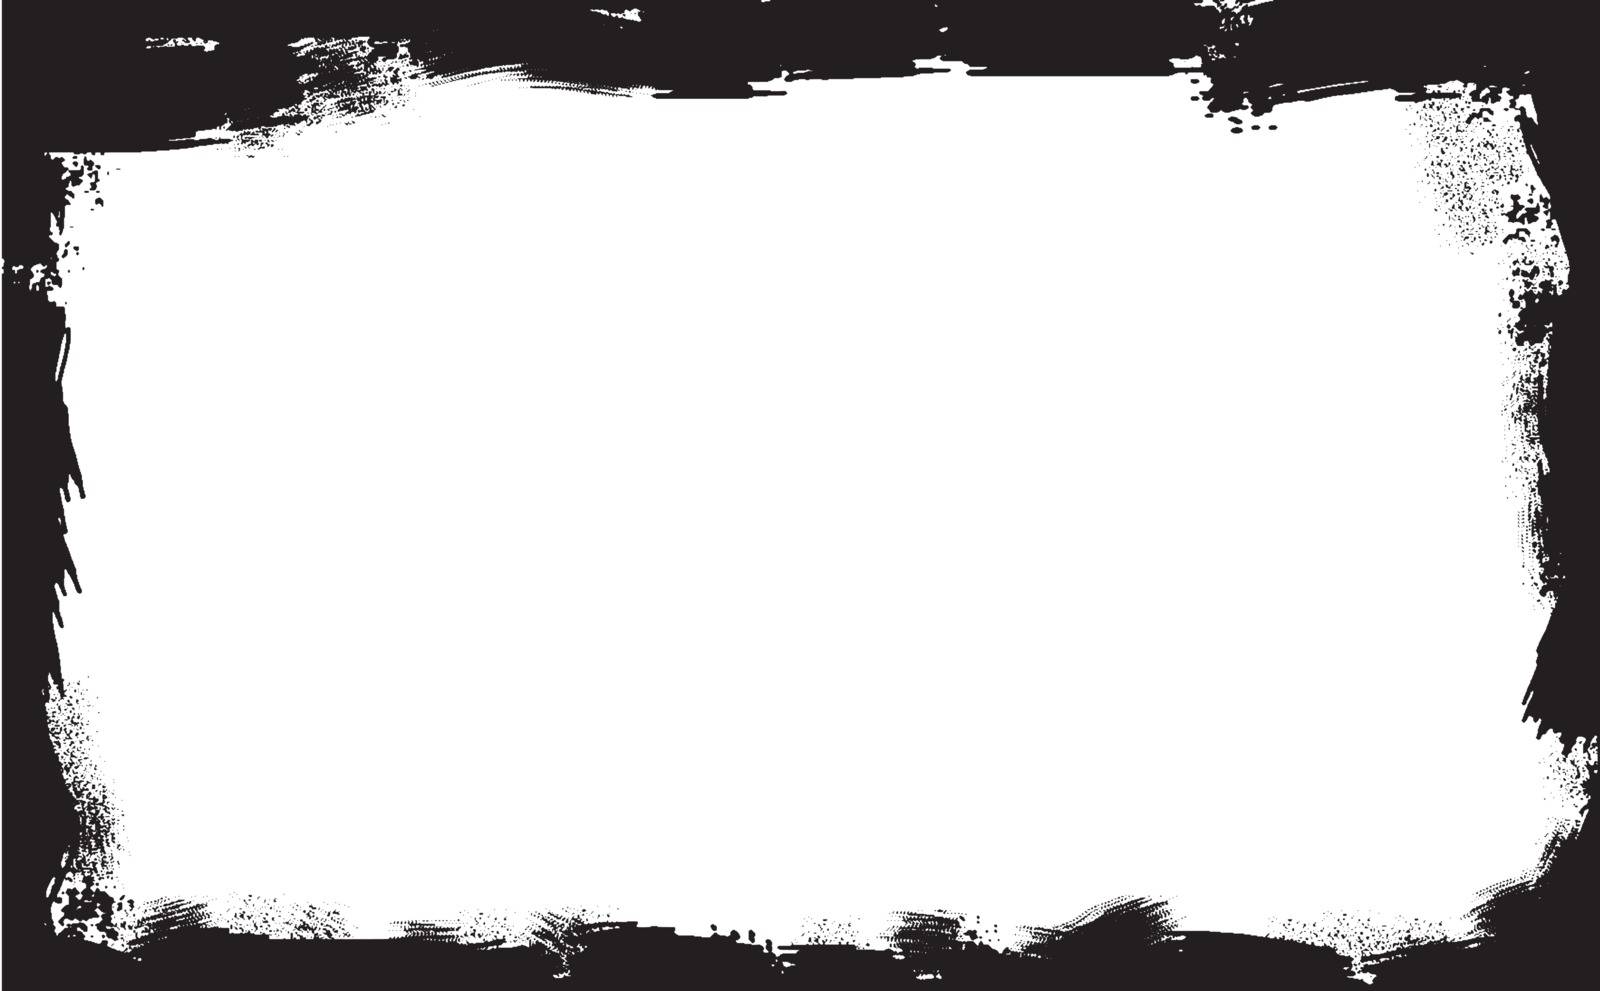 A black grunge border over a white background